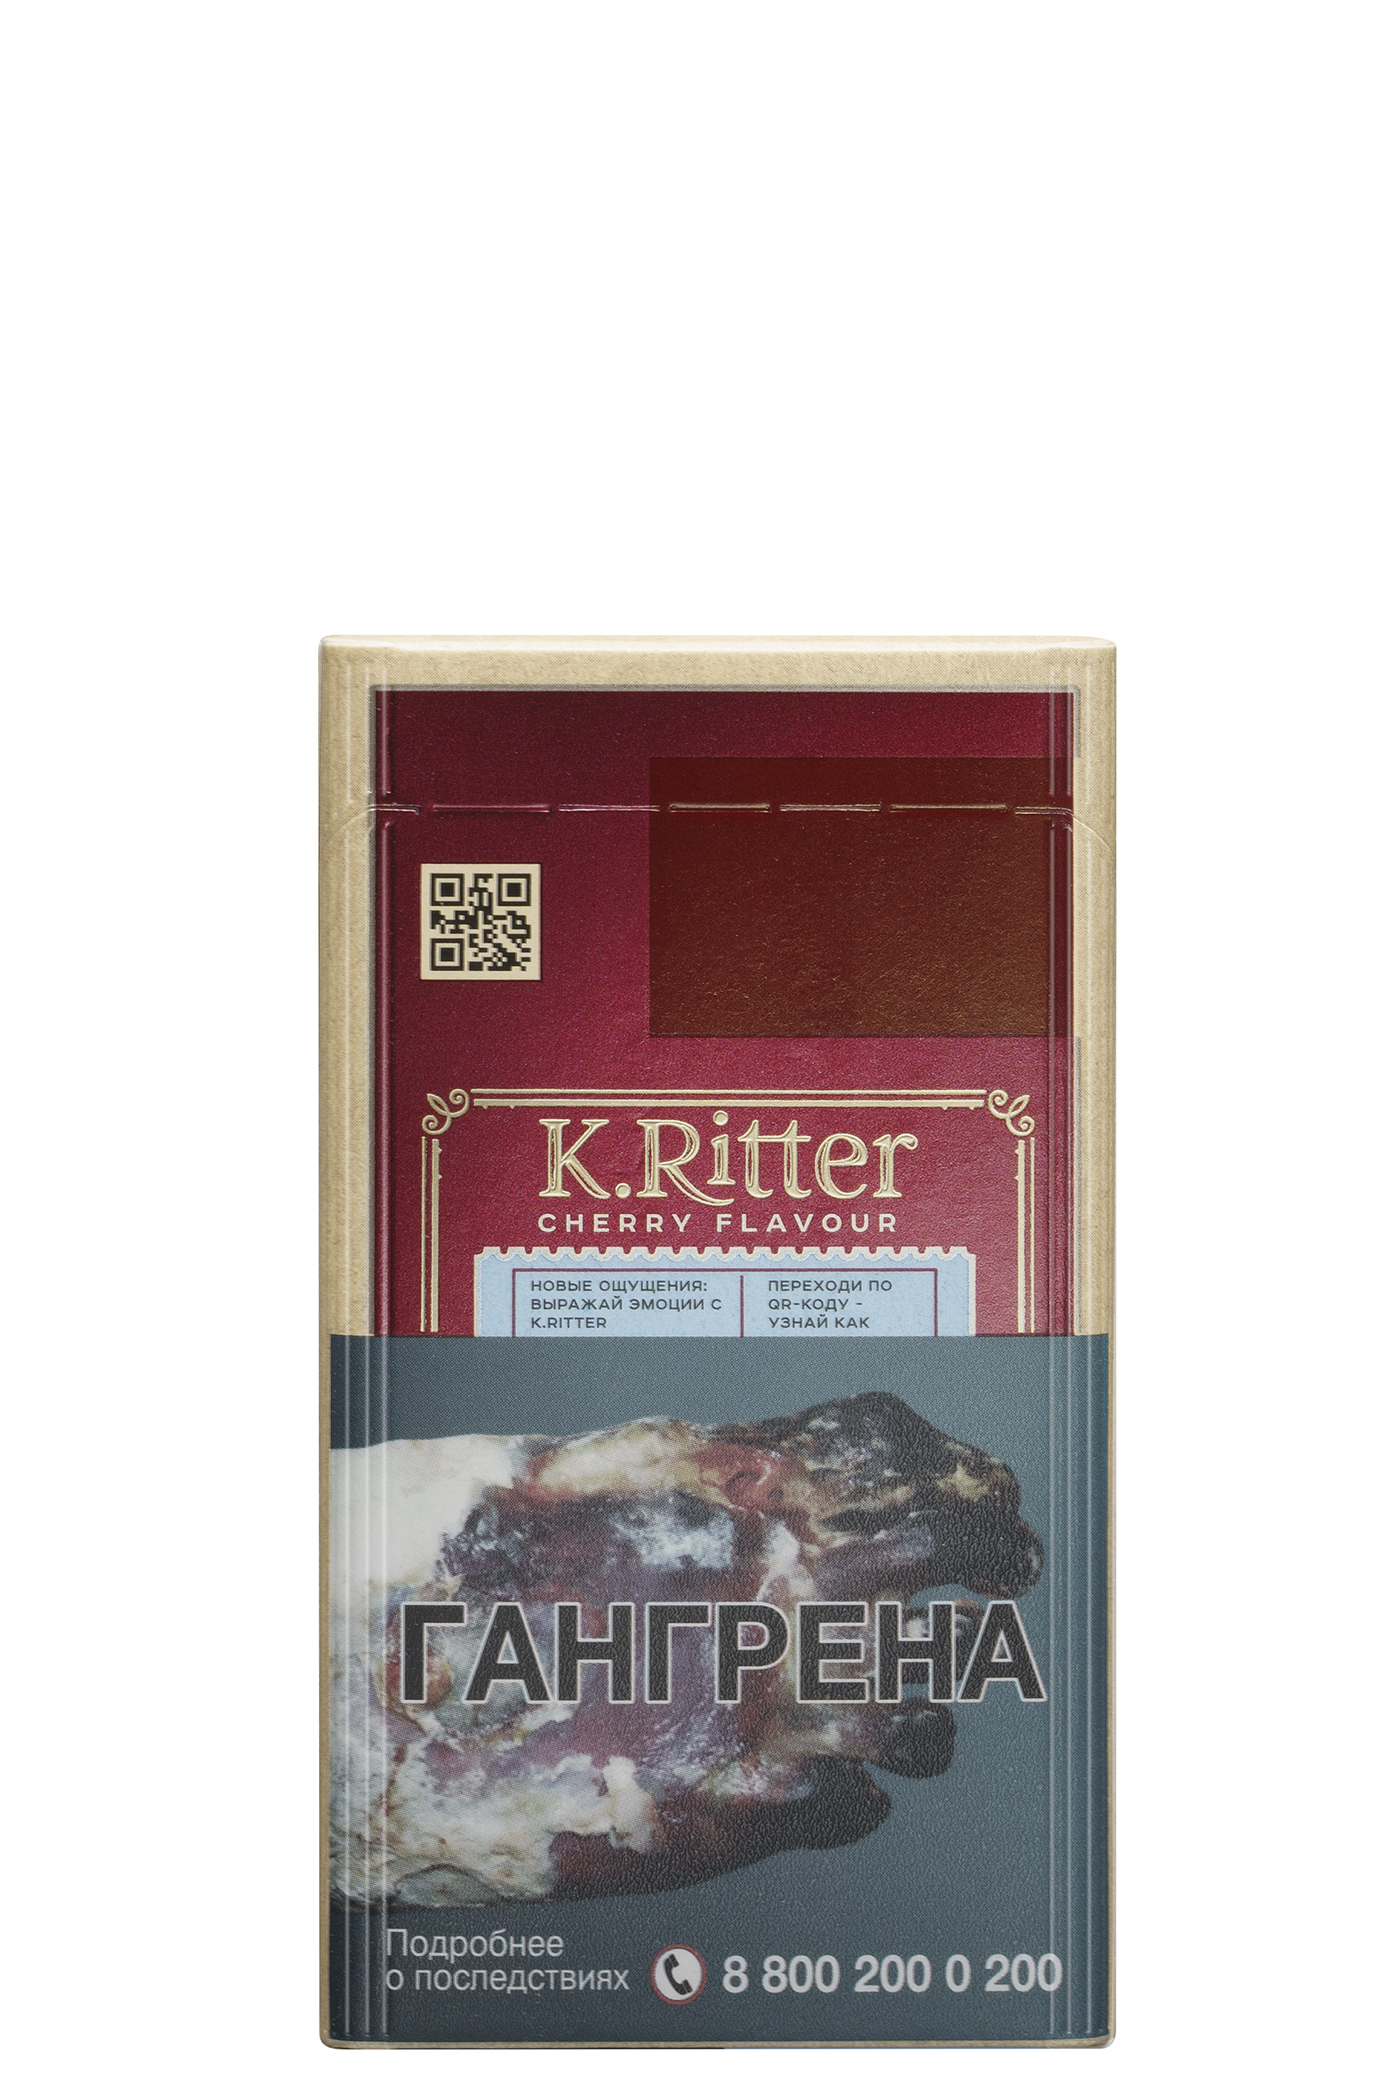 Ritter сигареты купить. Сигареты k.Ritter компакт. Сигареты к.Риттер компакт вишня. Сигареты k.Ritter вишня компакт. Сигареты к.Риттер компакт вишня (20).